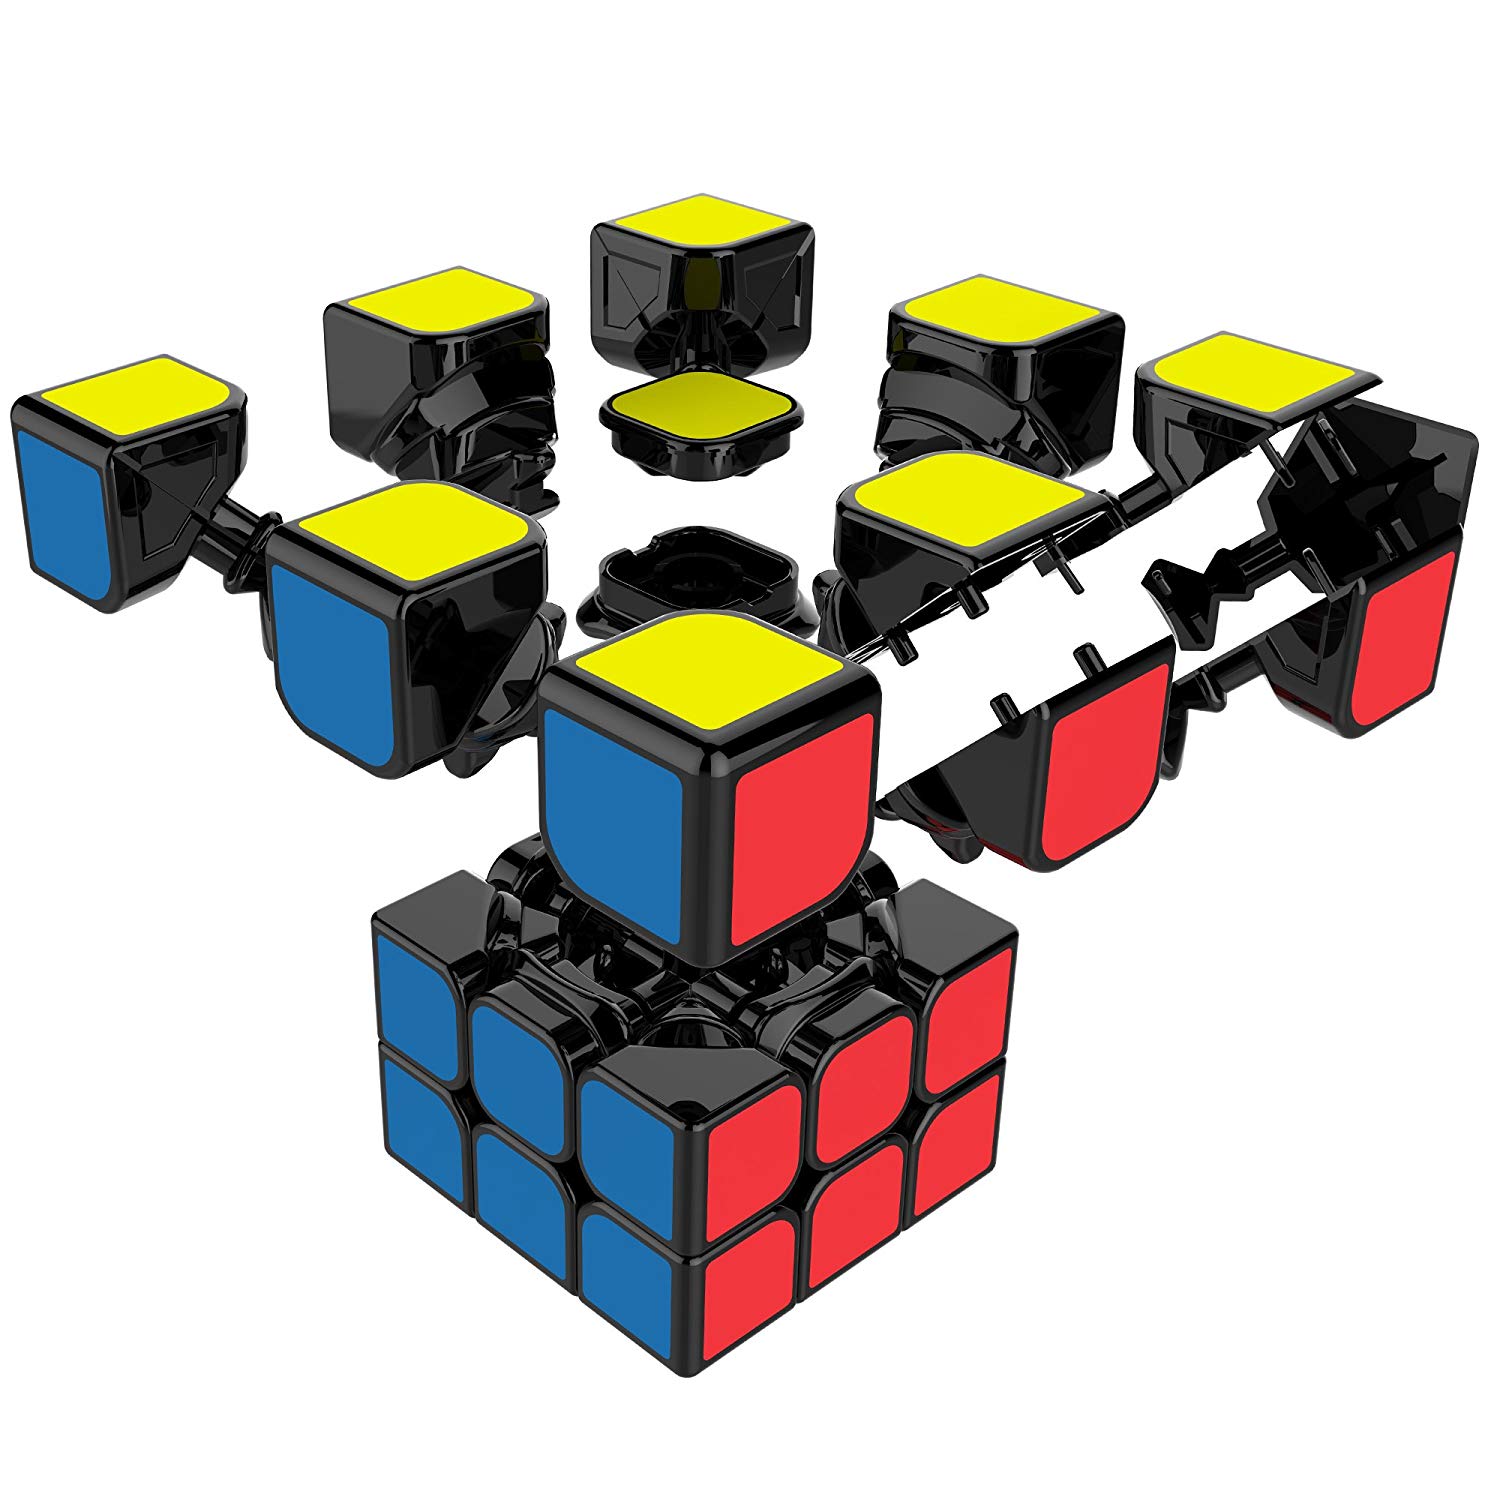 B MoYu Aolong V2 Magic Cube Édition améliorée Noir 3 x 3 carrés par Roxenda